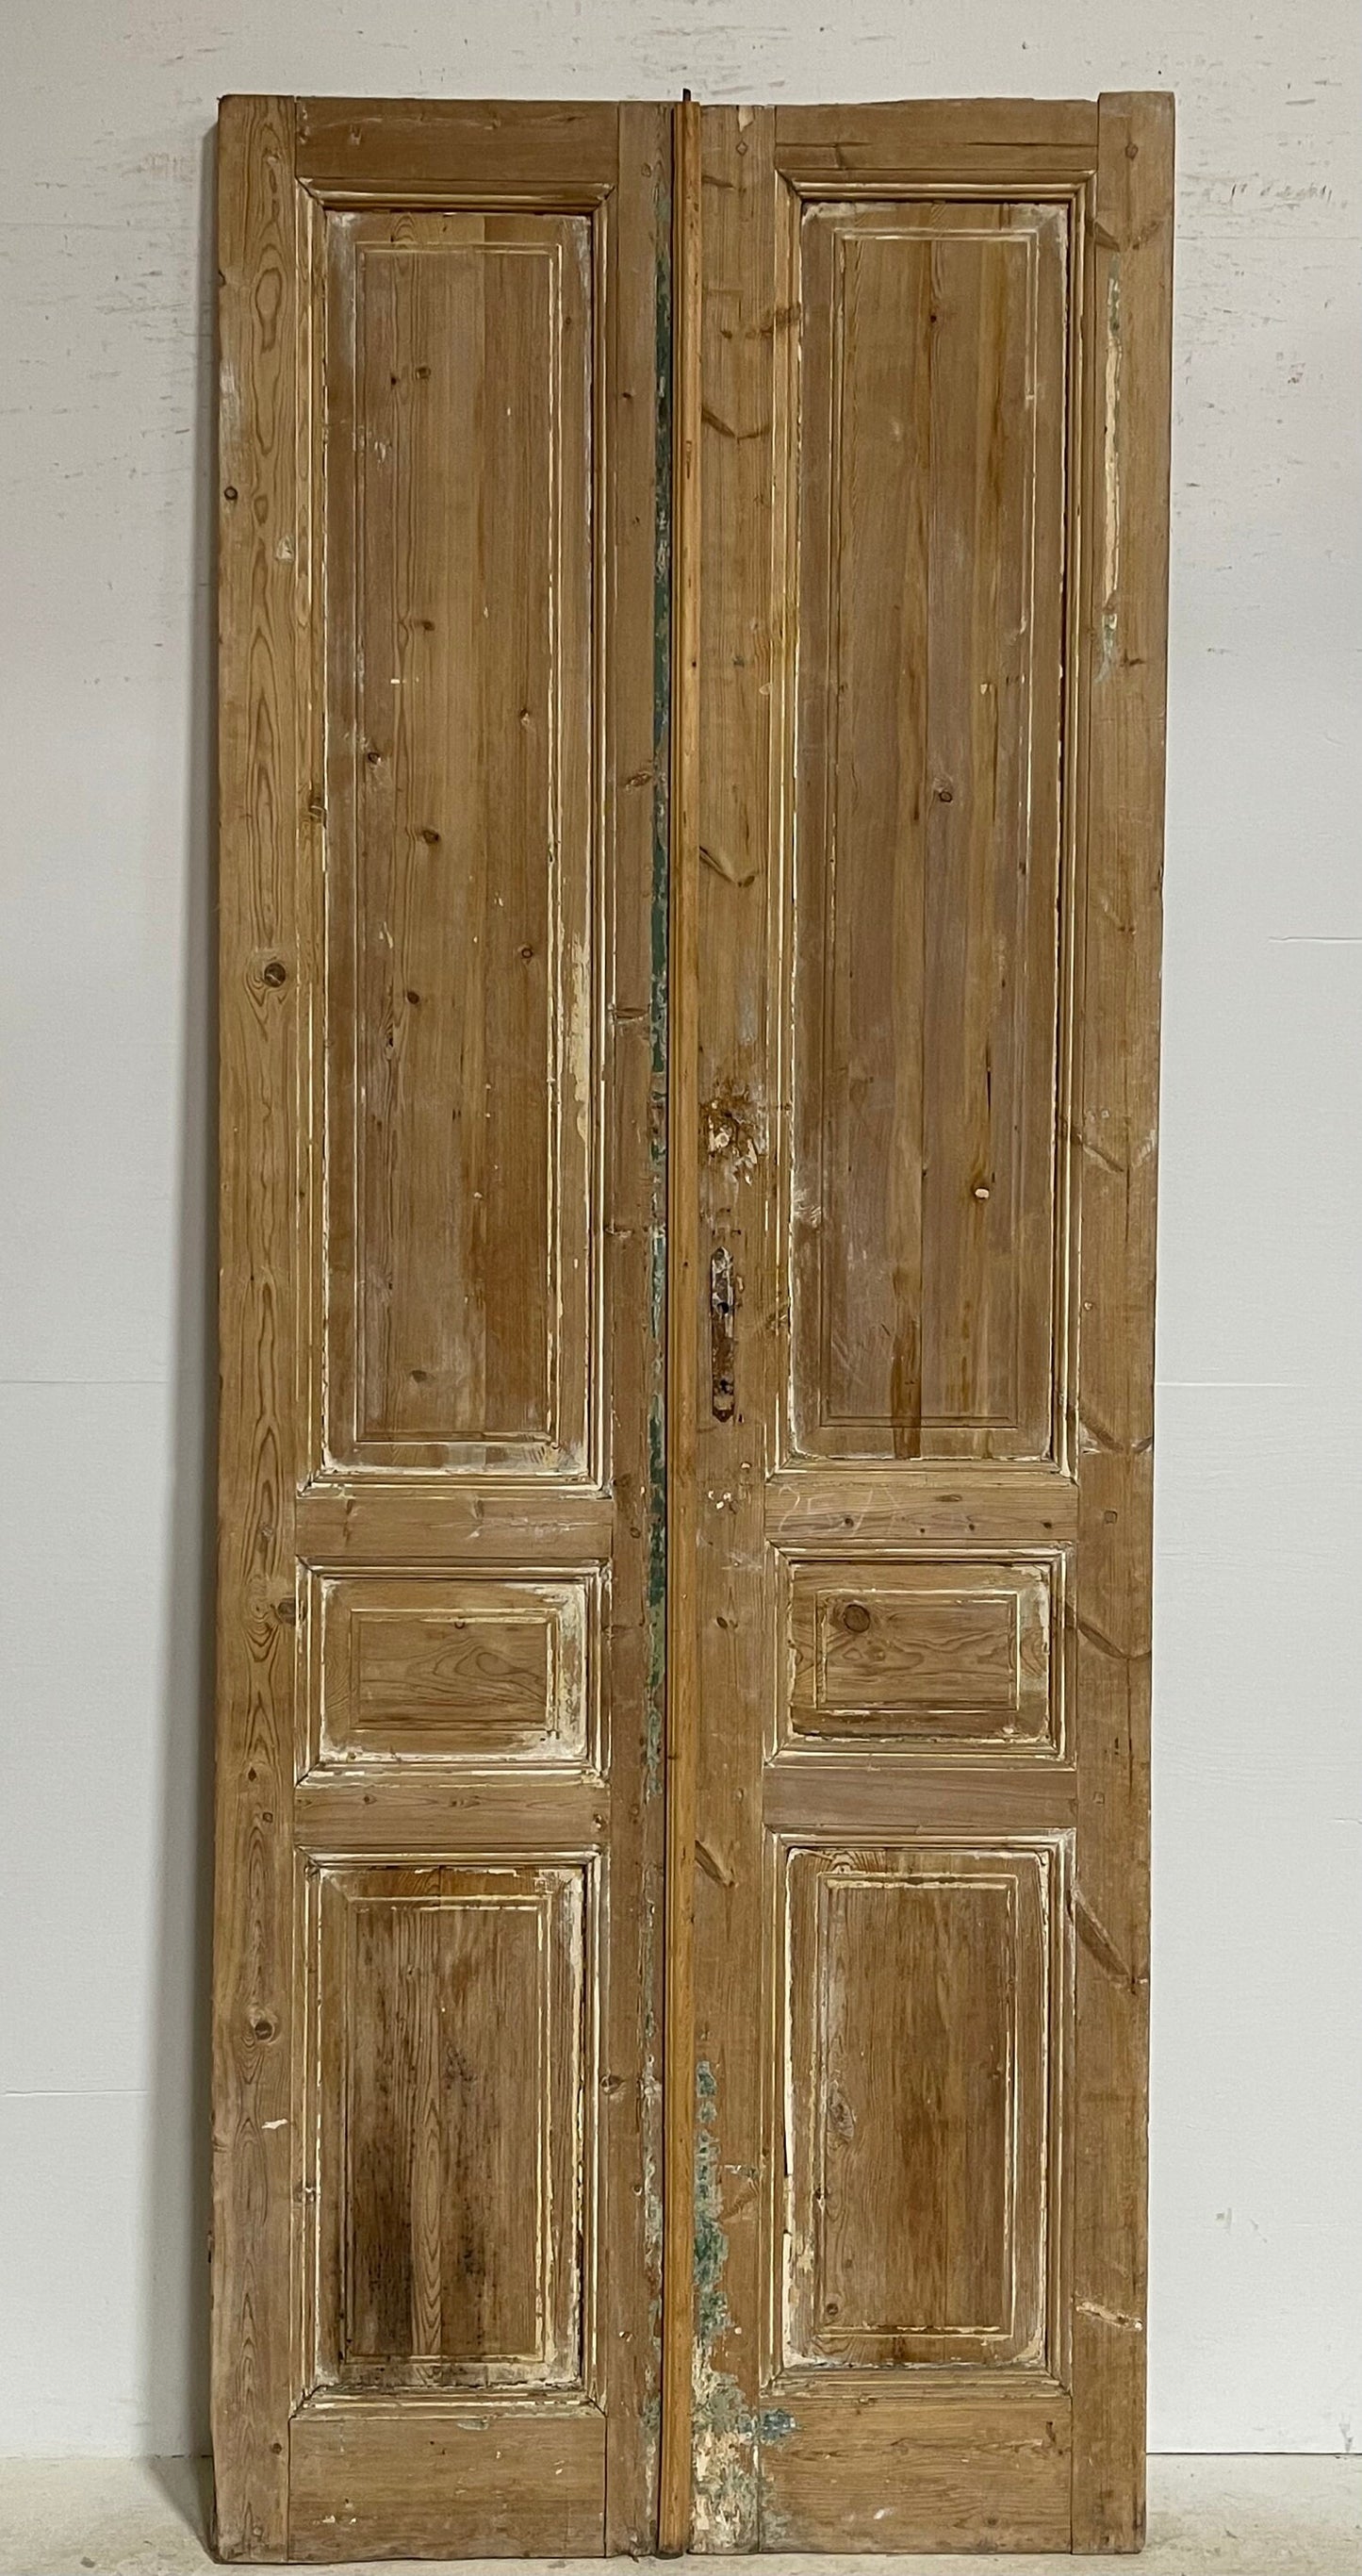 Antique French panel doors (100.5x38.75) G0139s